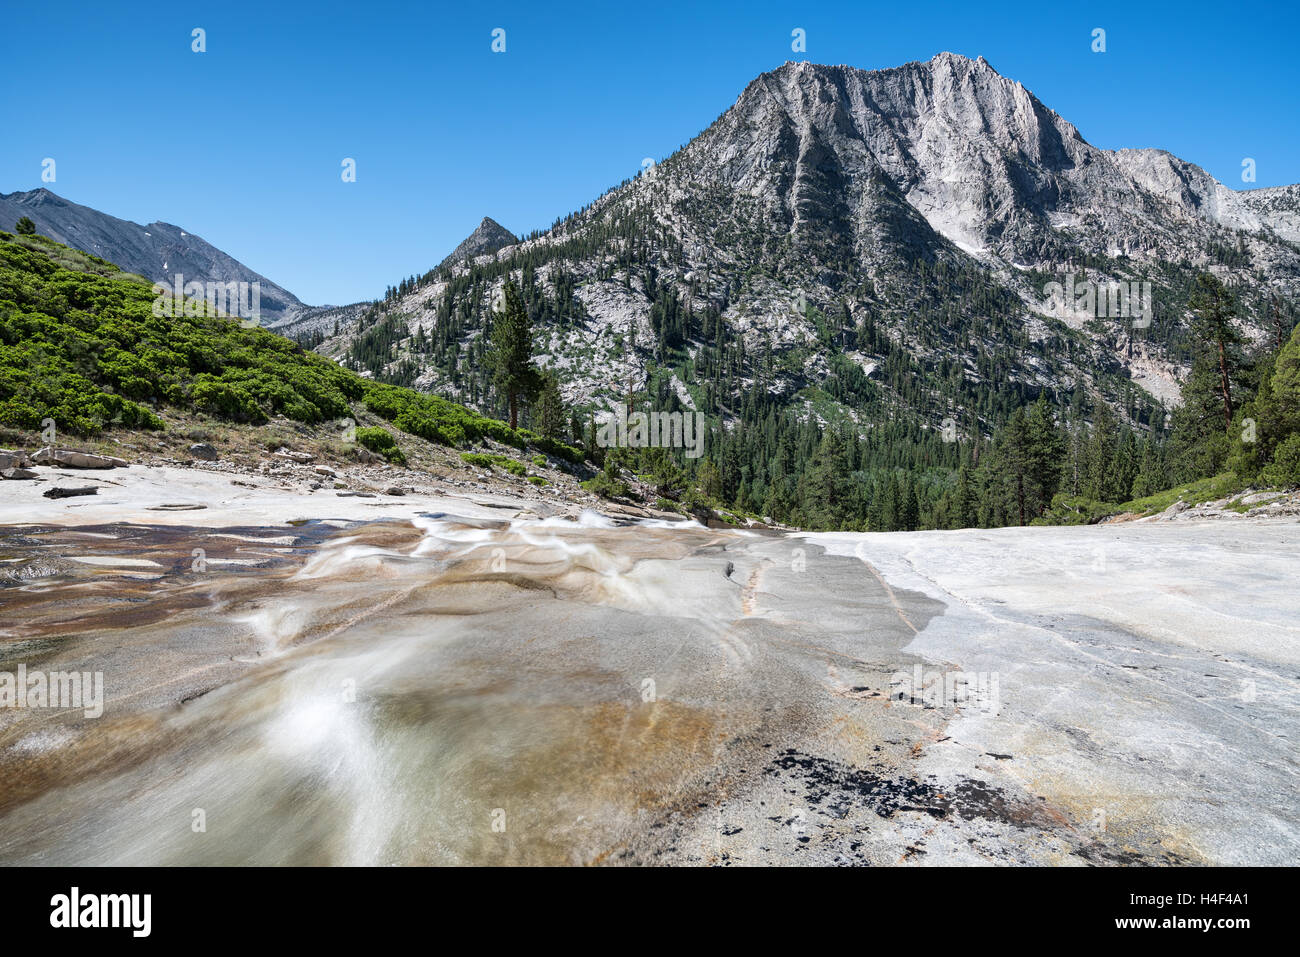 River running over bedrock, John Muir Tarail, Sierra Nevada mountains, California, United States of America, North America Stock Photo